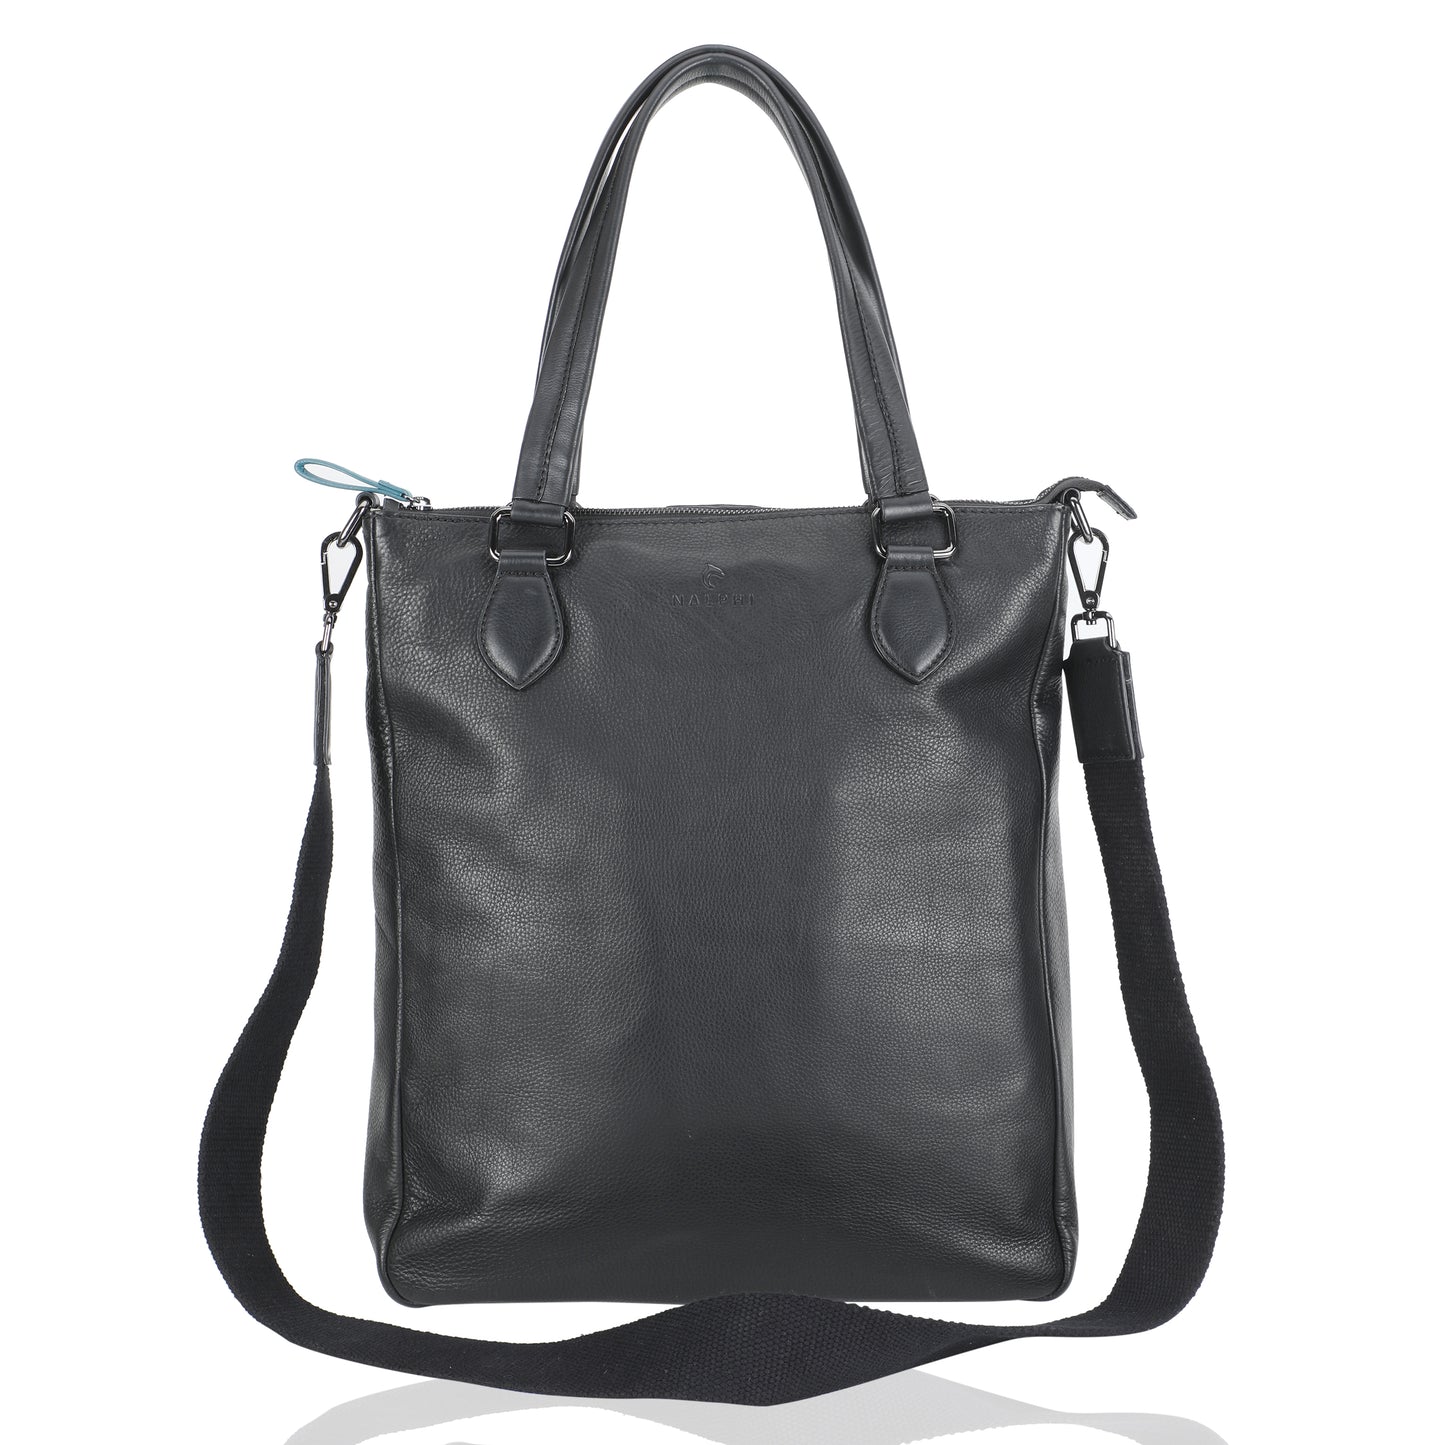 NALPHI Luxury Leather Unisex & Laptop Bag with Automatic Lights